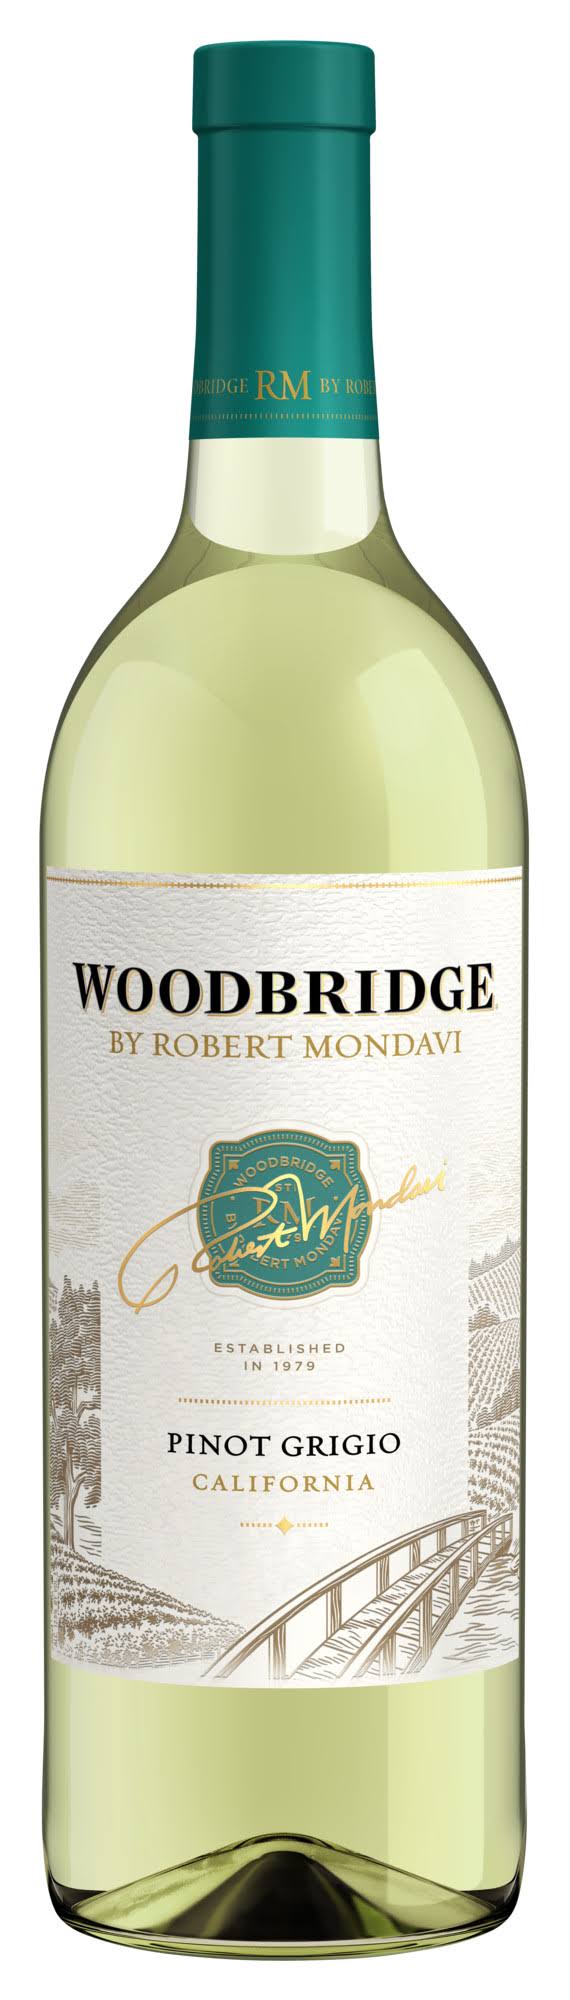 Woodbridge Pinot Grigio - California, 2008